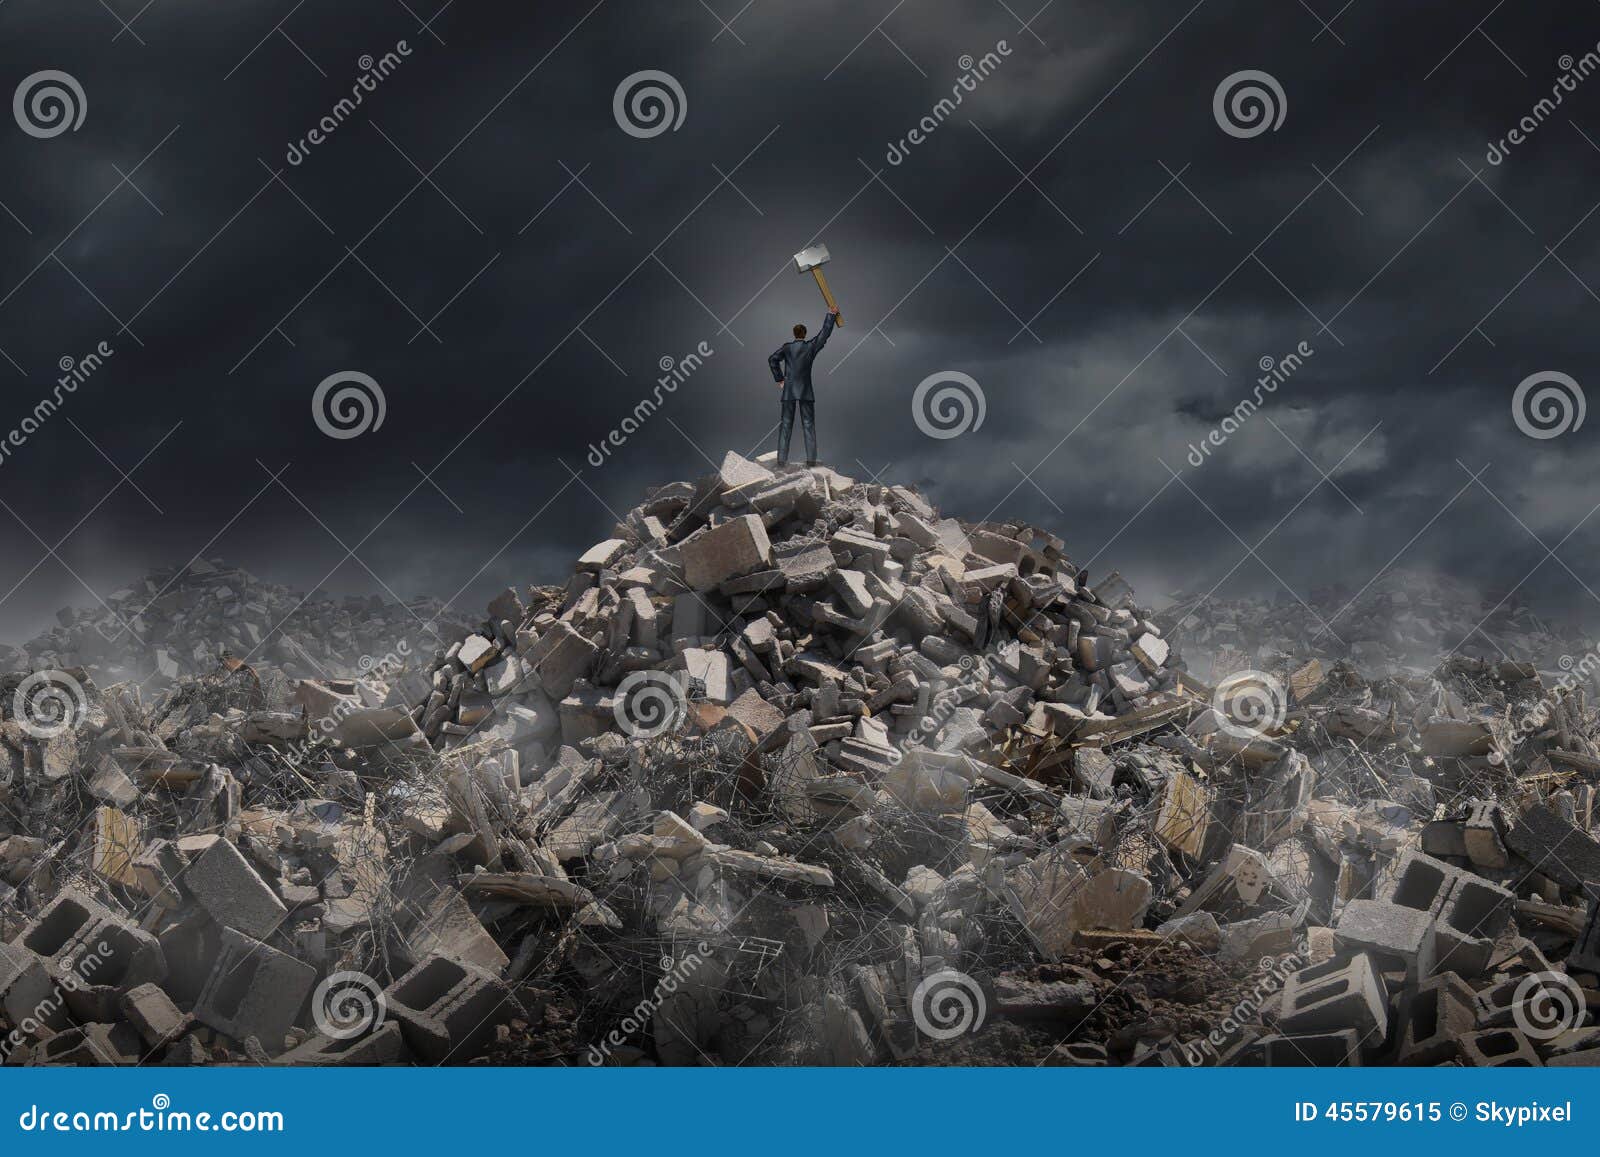 destroy-demolish-concept-as-businessman-standing-mountain-building-ruins-holding-sledge-hammer-as-business-45579615.jpg